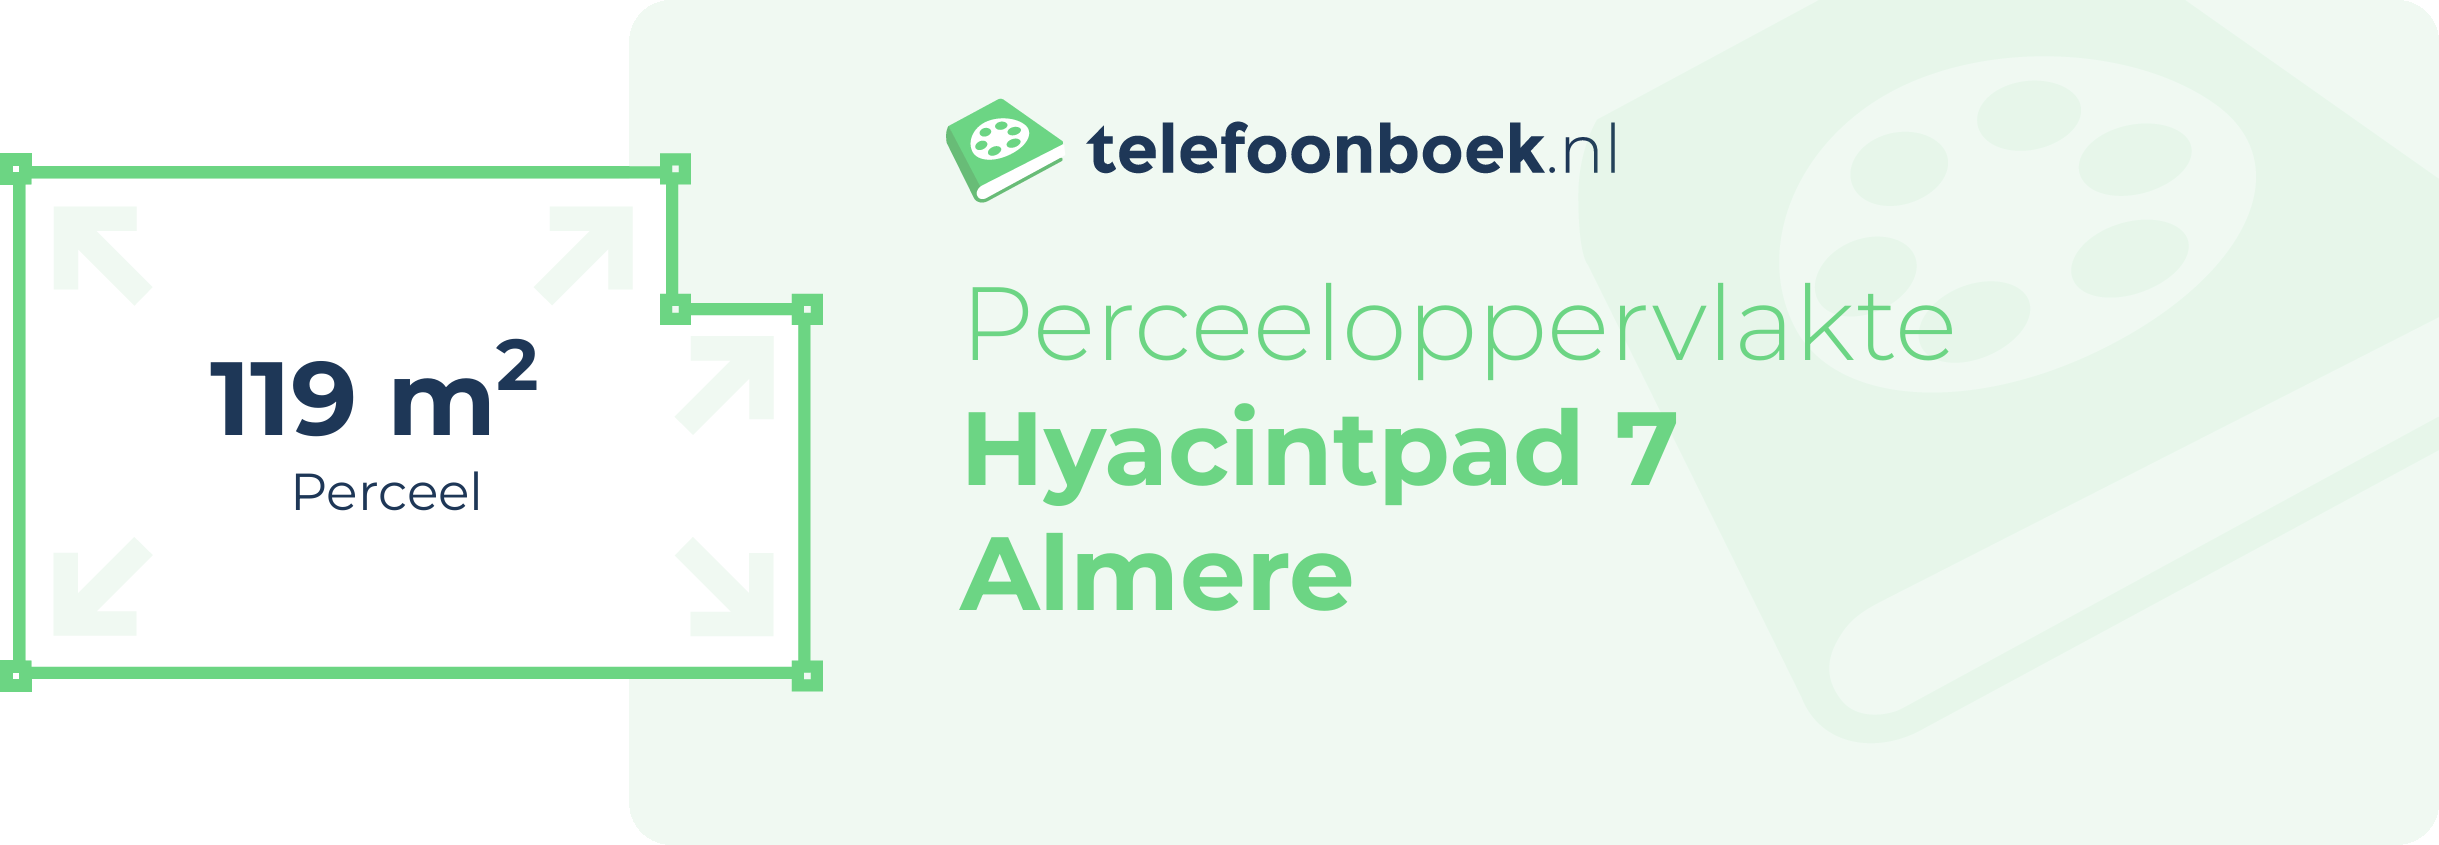 Perceeloppervlakte Hyacintpad 7 Almere